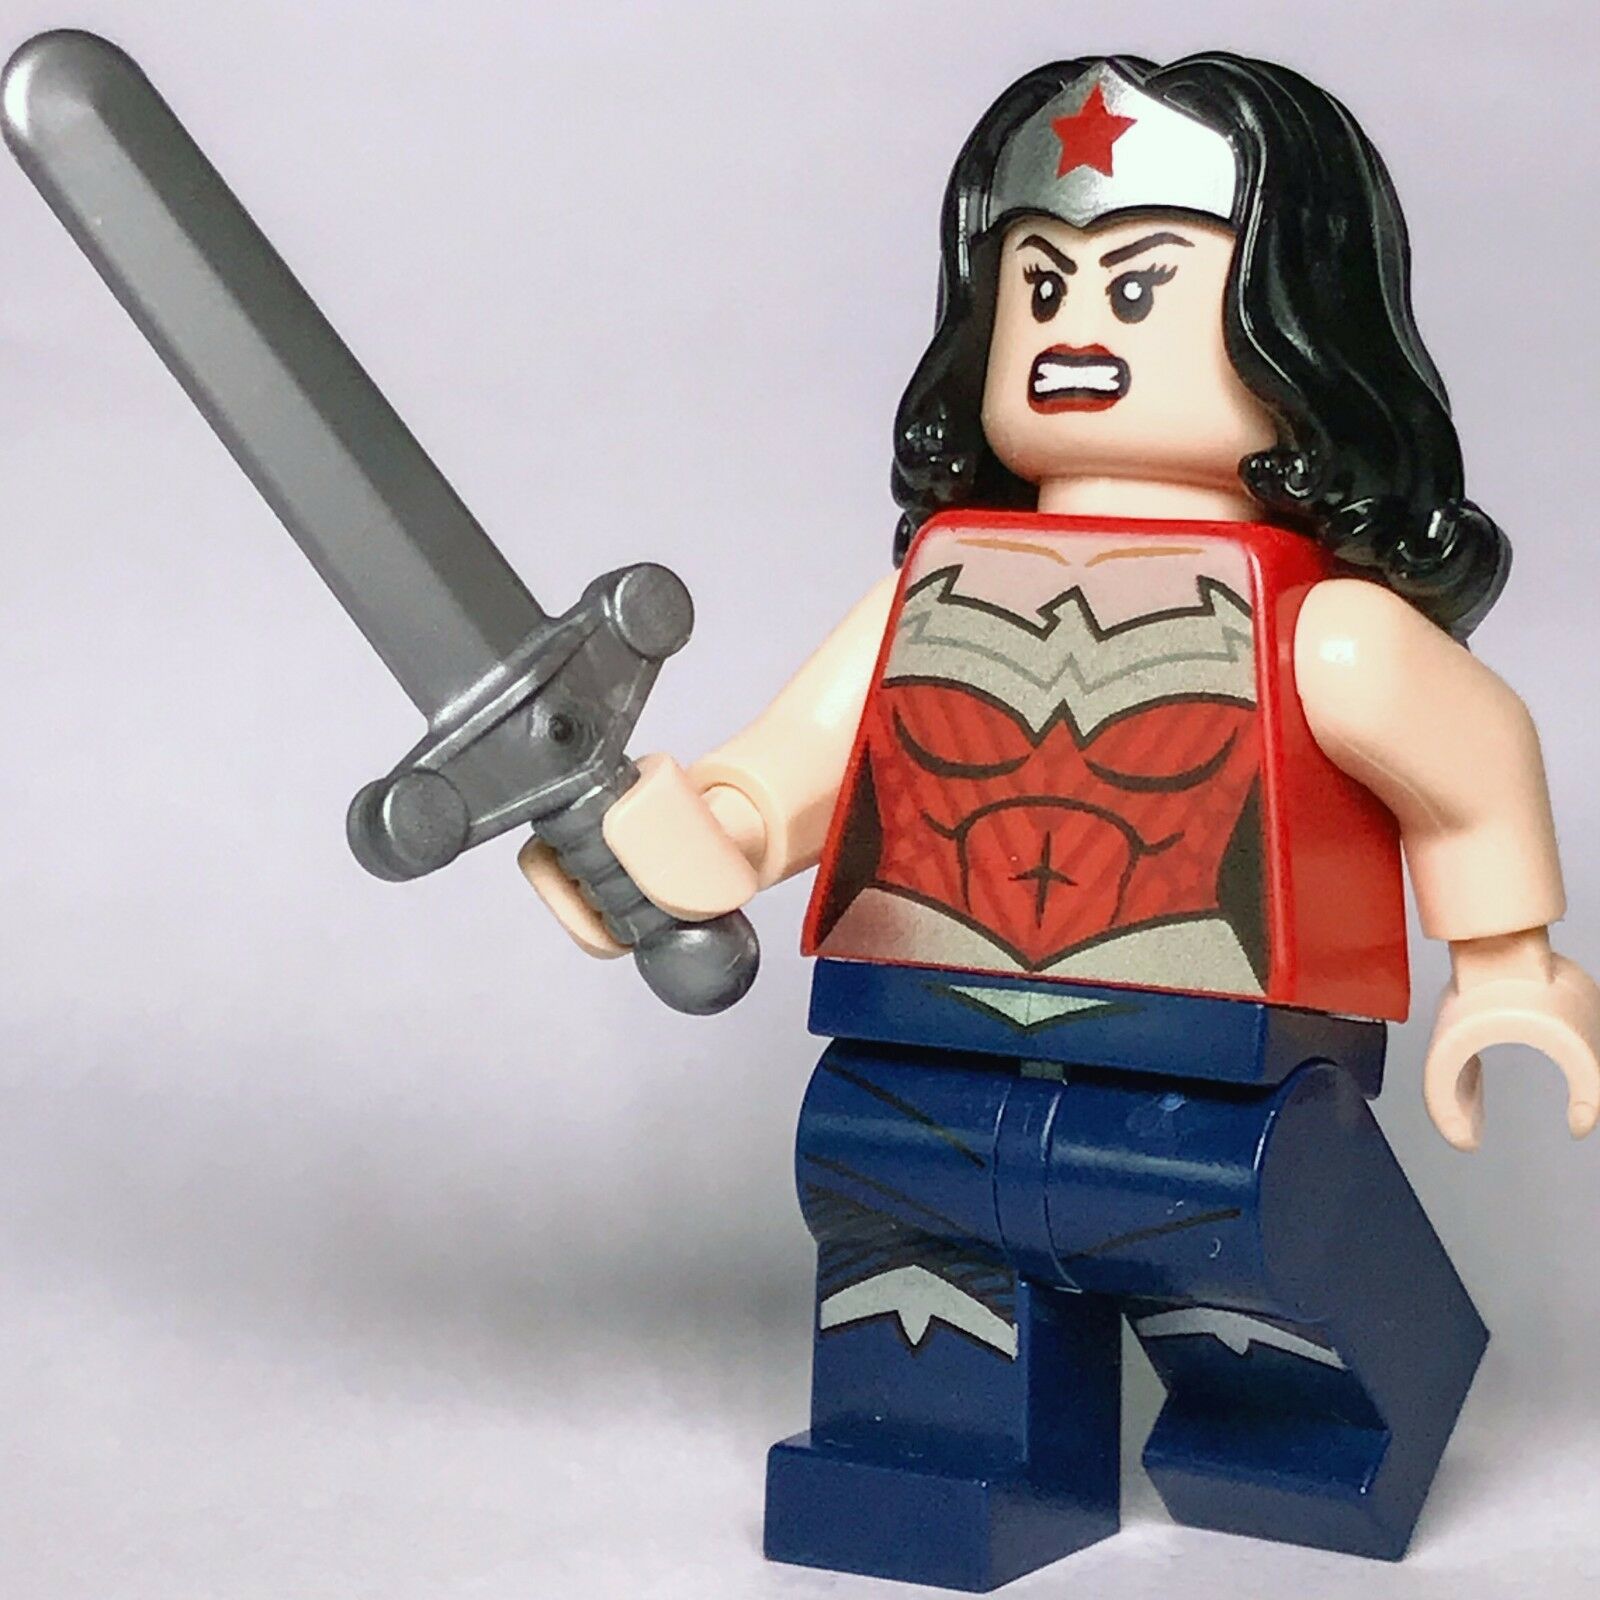 DC Super Heroes LEGO Wonder Woman Justice League Minifigure from set 76026 - Bricks & Figures